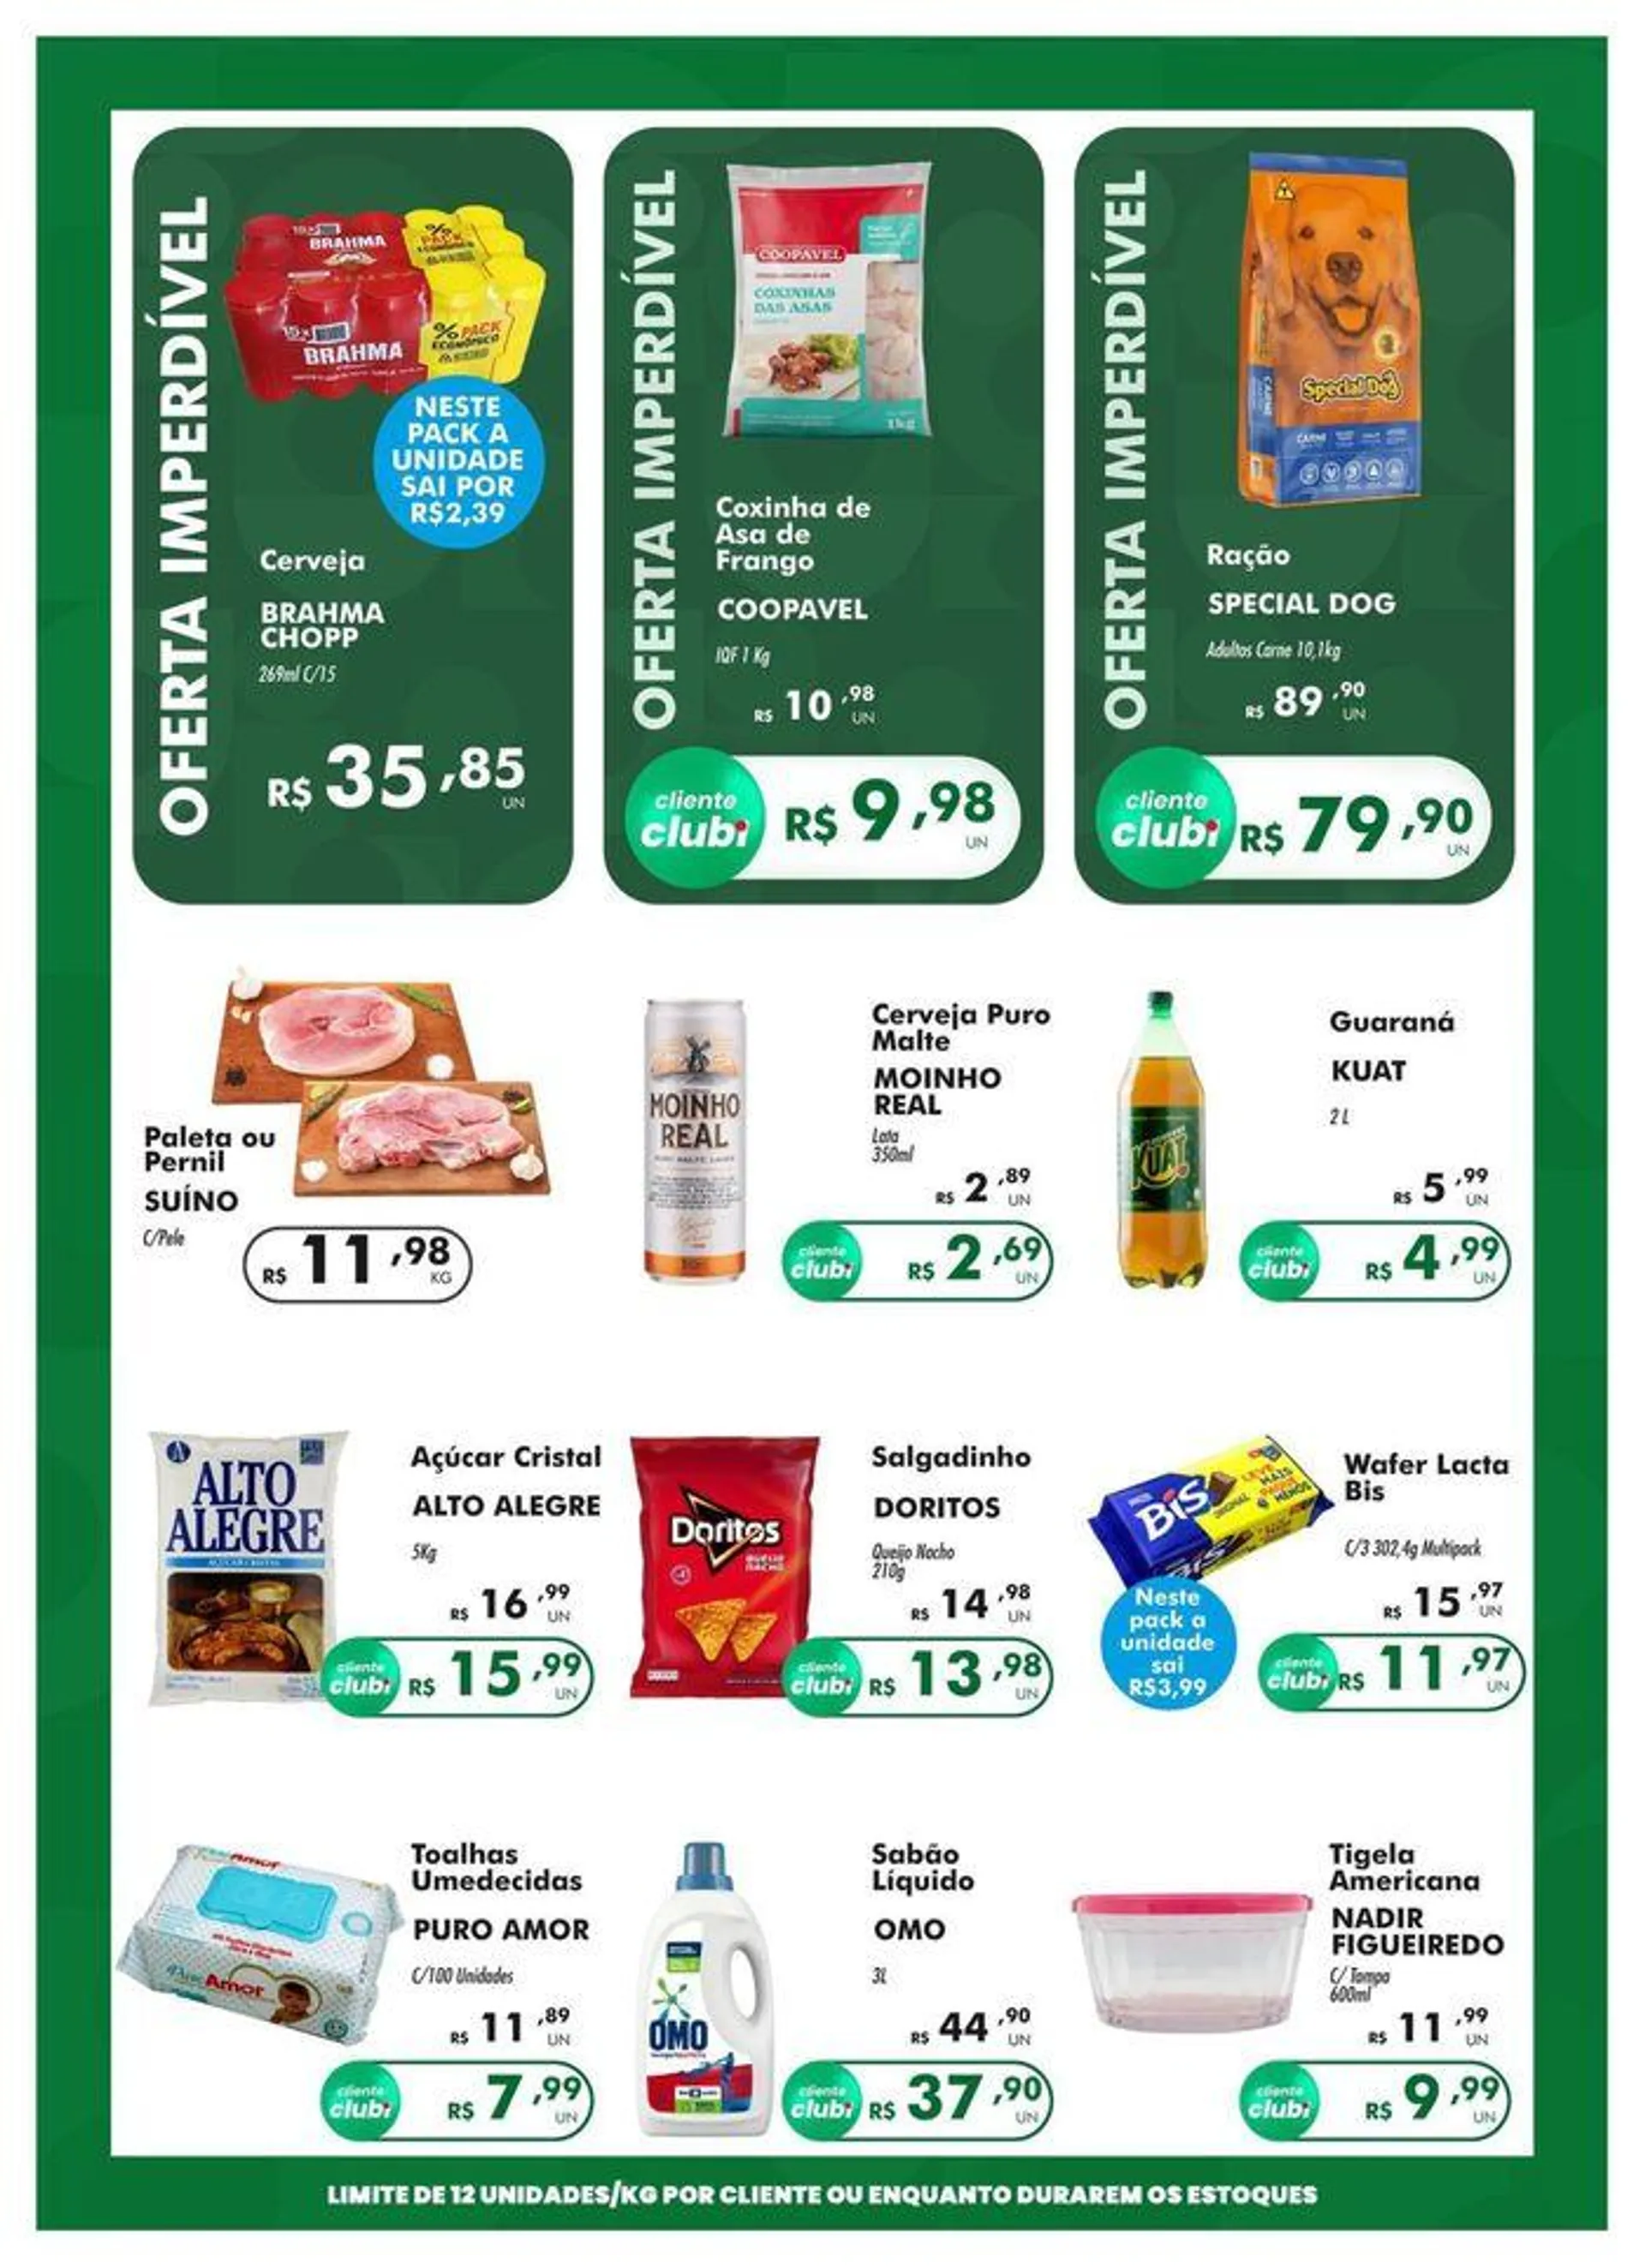 Oferta Irani Supermercados - 1